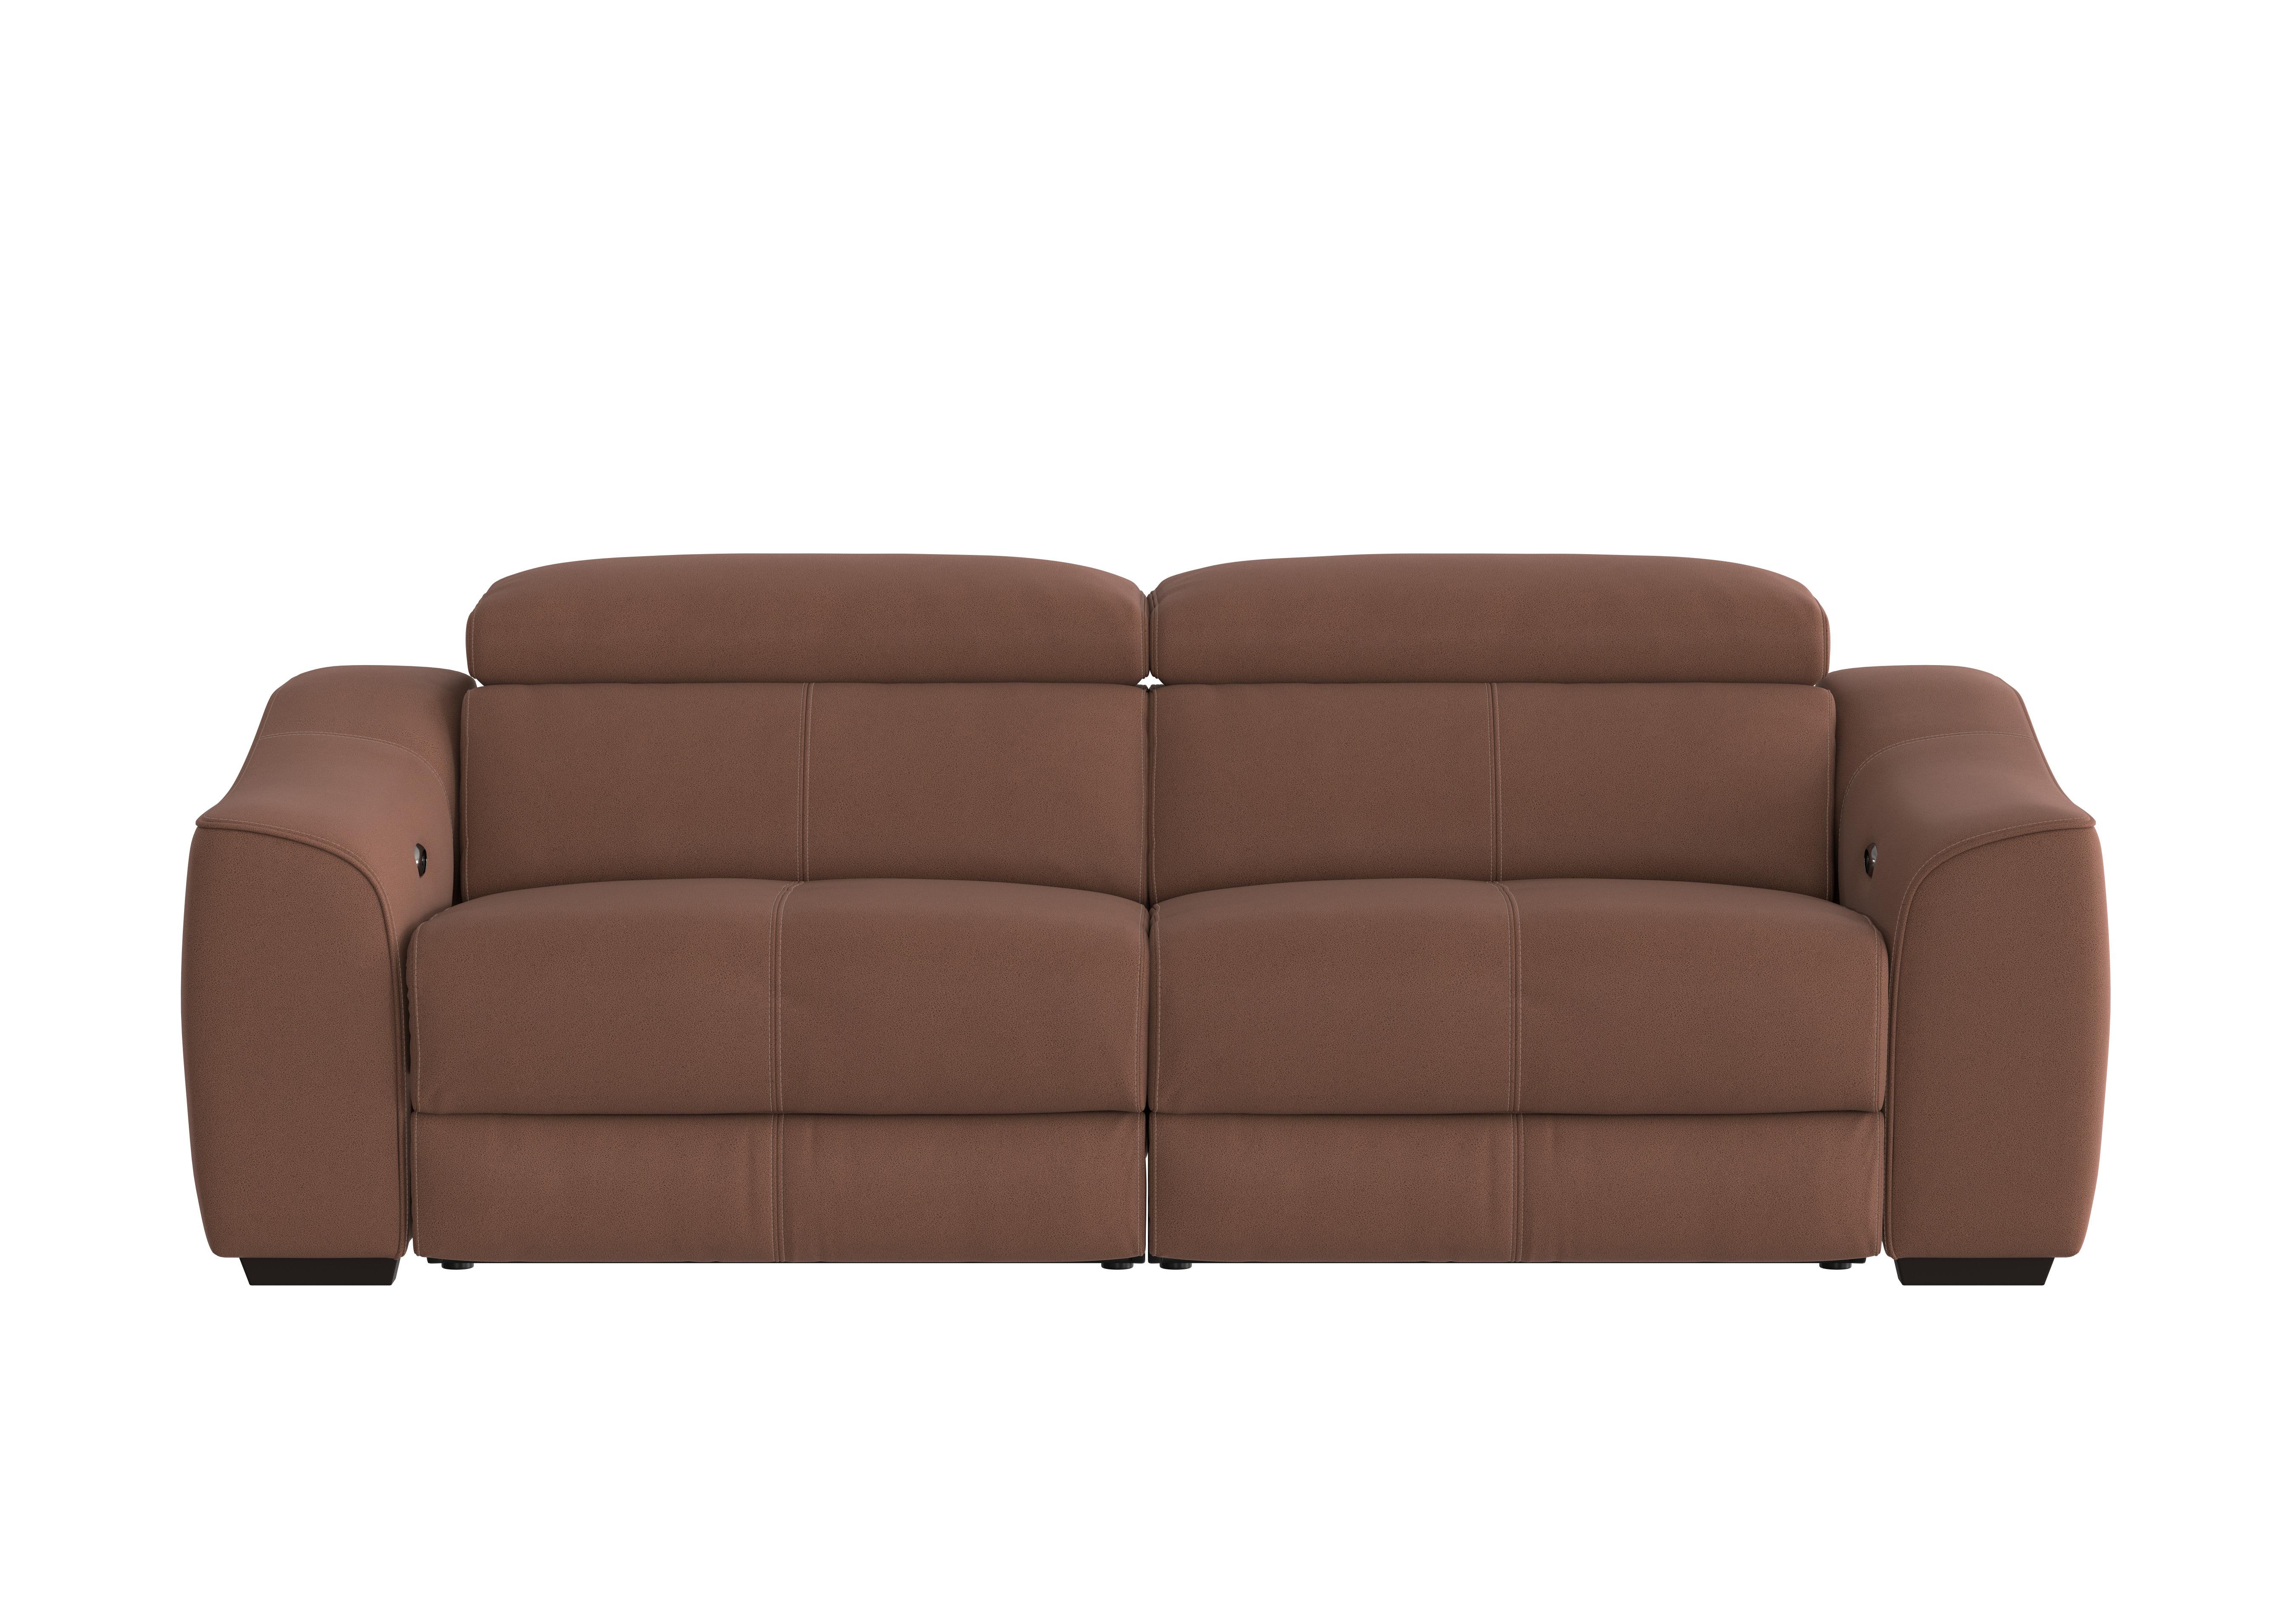 Elixir 3 Seater Fabric Sofa in Bfa-Blj-R05 Hazelnut on Furniture Village